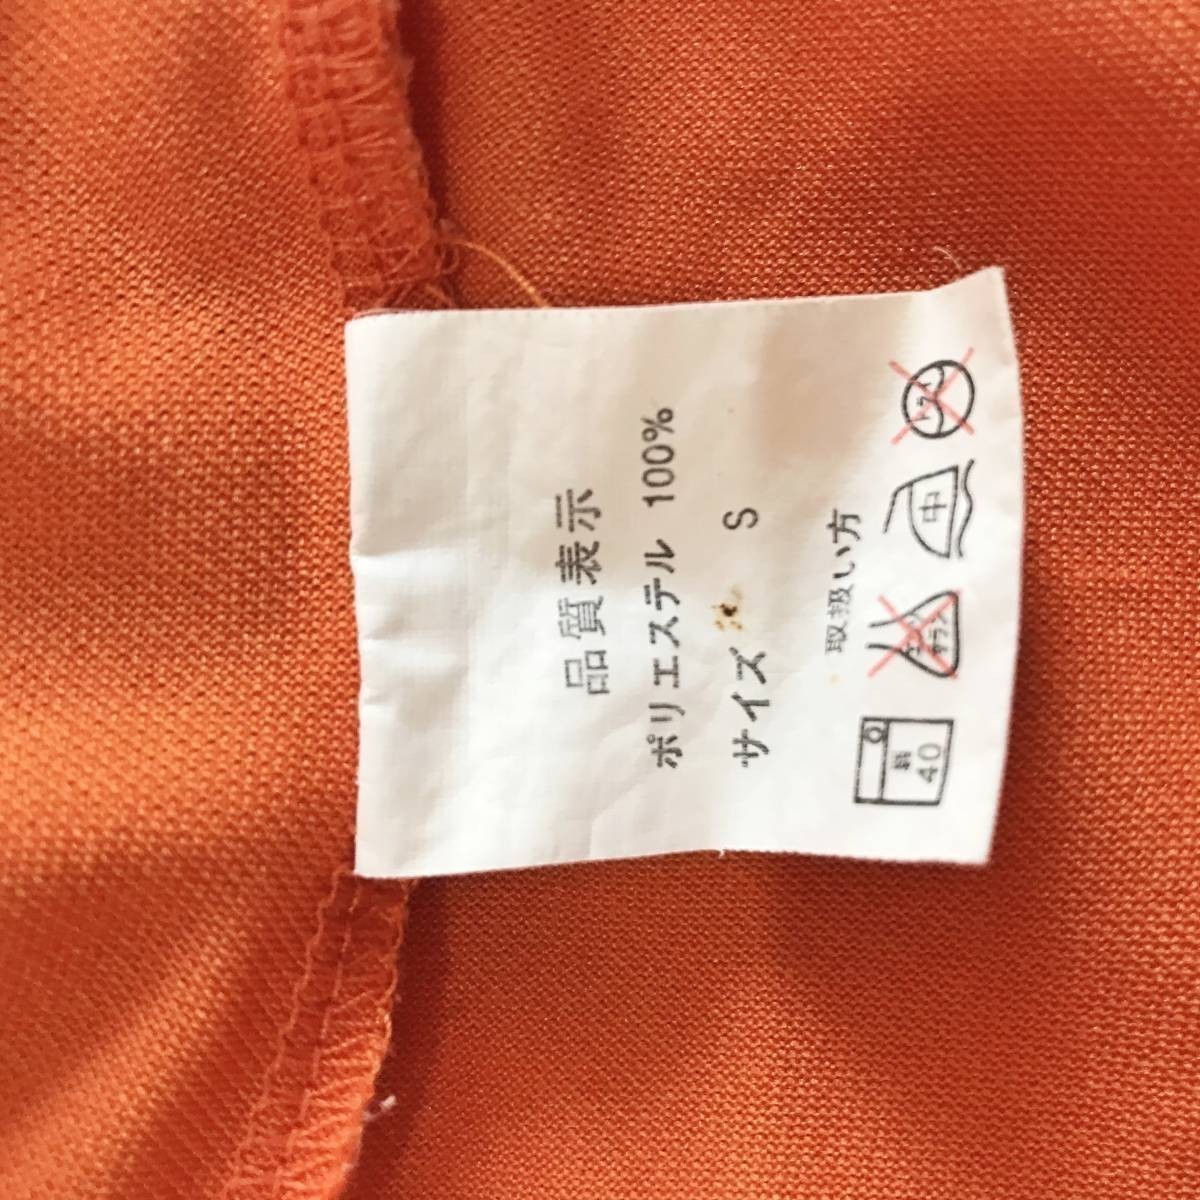 * ultra rare! hard-to-find *AU/e- You polo-shirt with short sleeves uniform uniform orange men's S ON1617